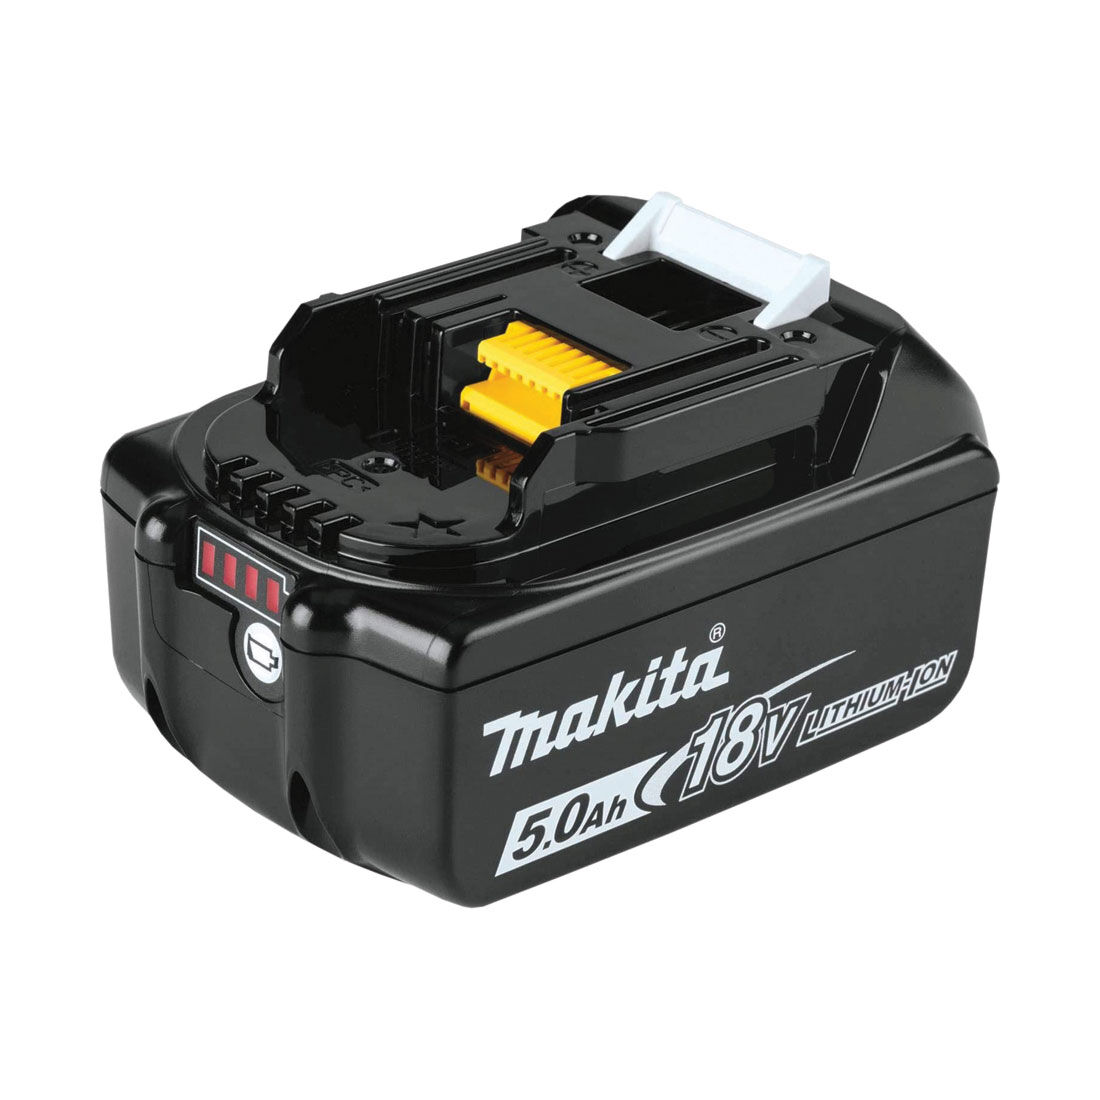 Makita 18V 5.0Ah Battery, , scanz_hi-res